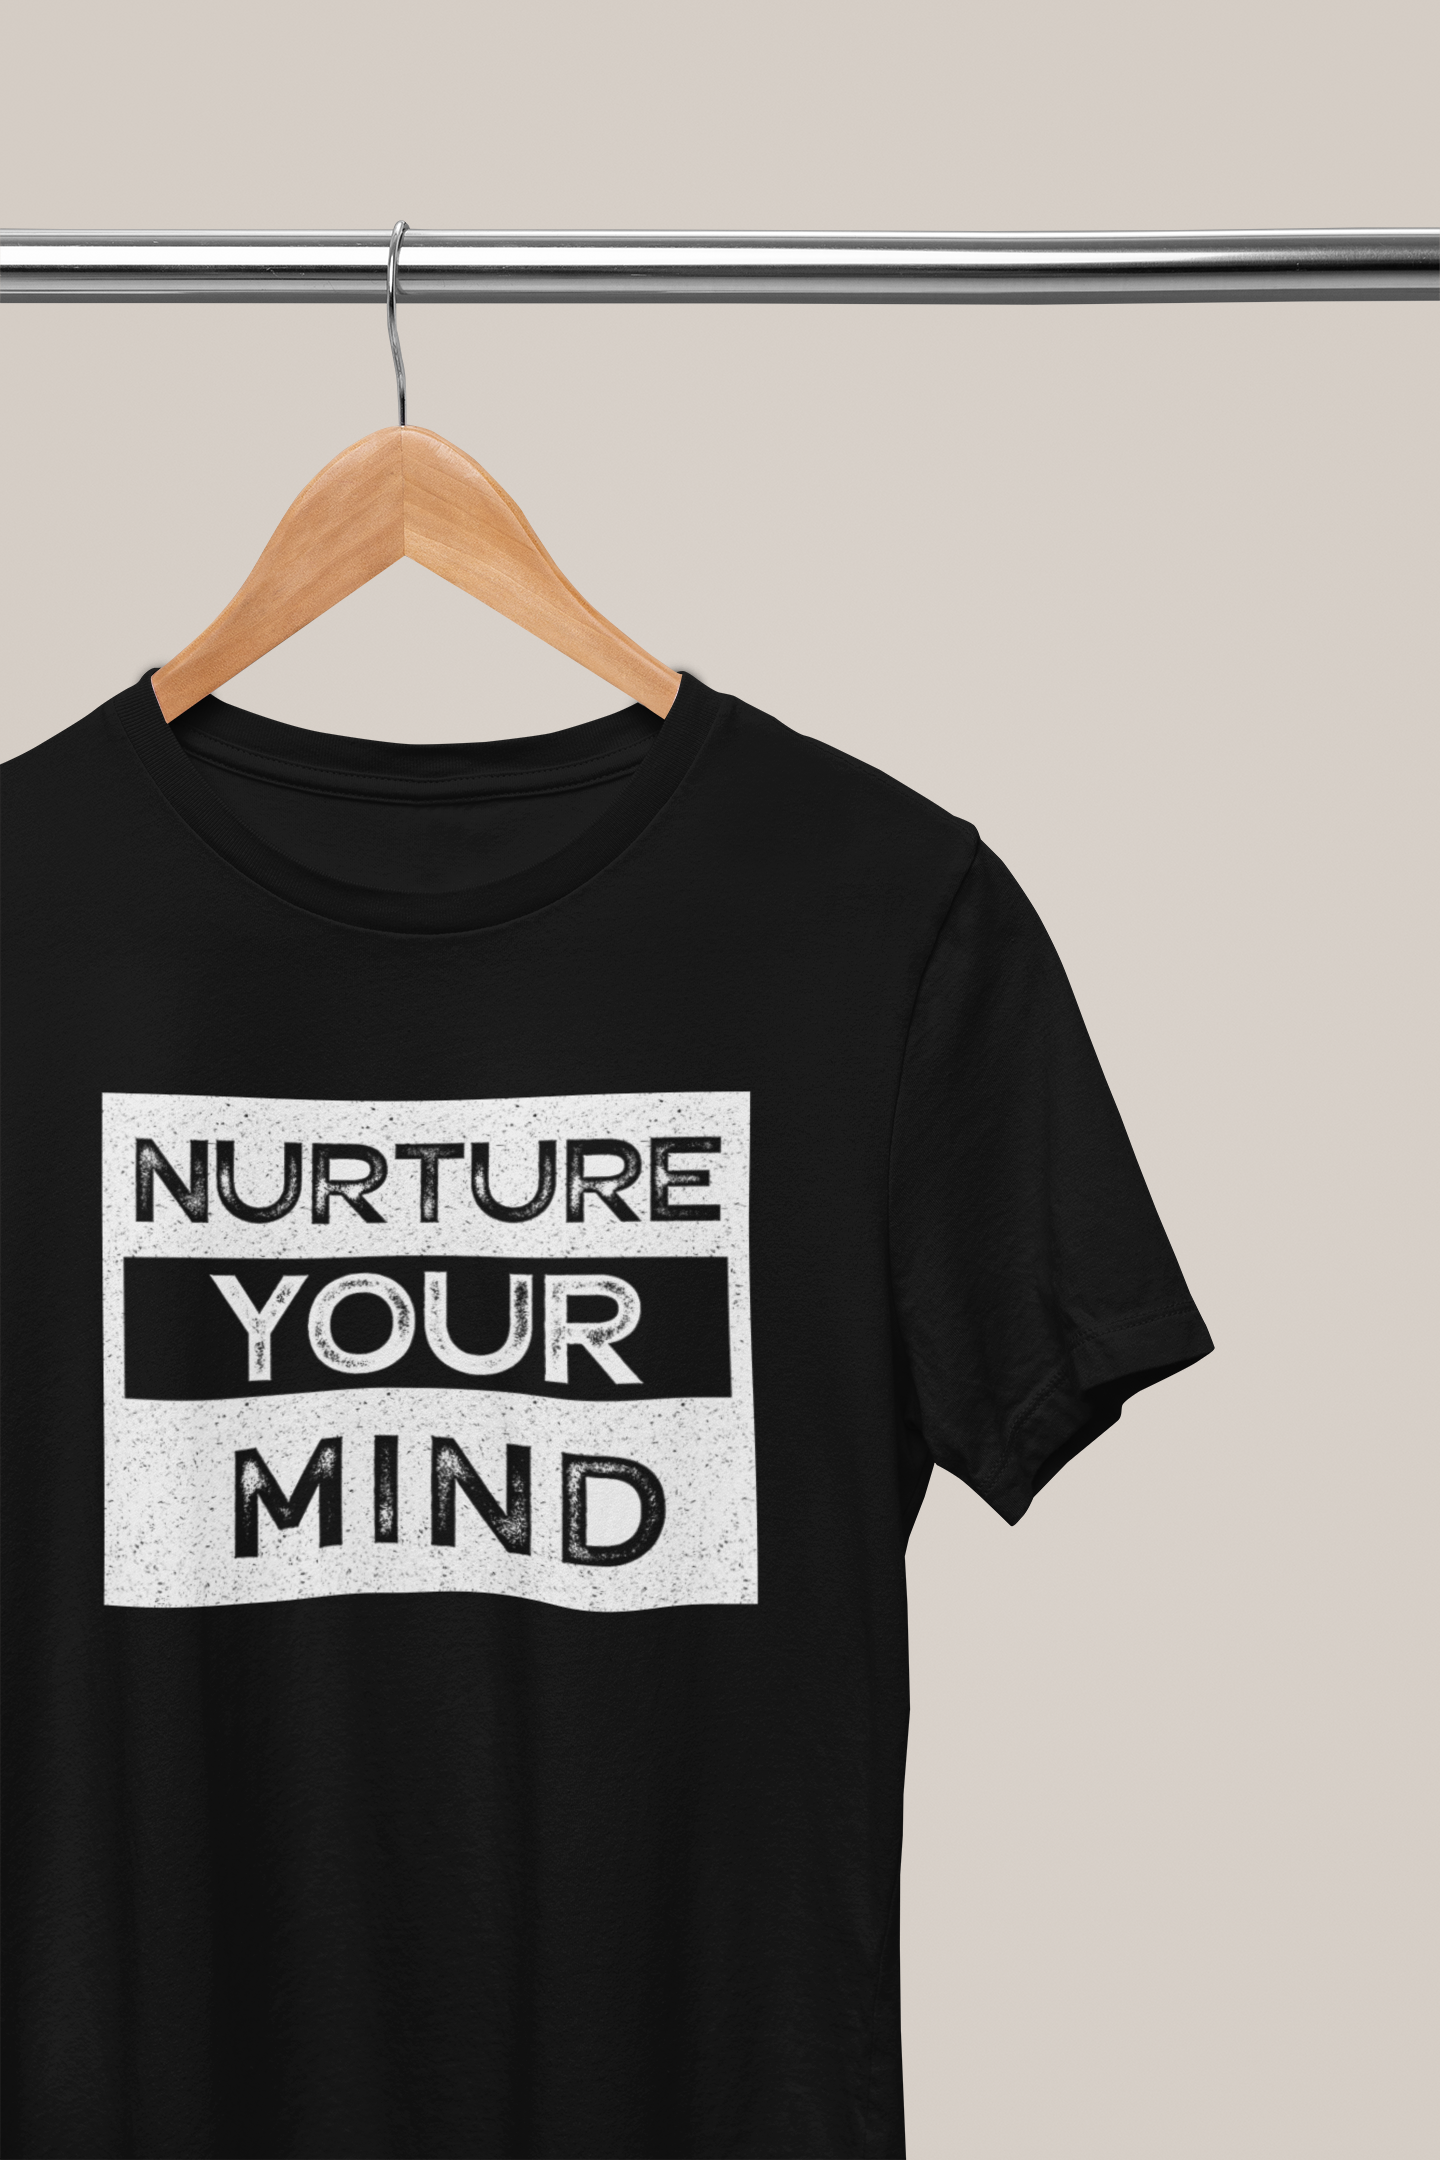 Nurture Your Mind, Hoodies, Sweatshirts, Tees, and Mugs